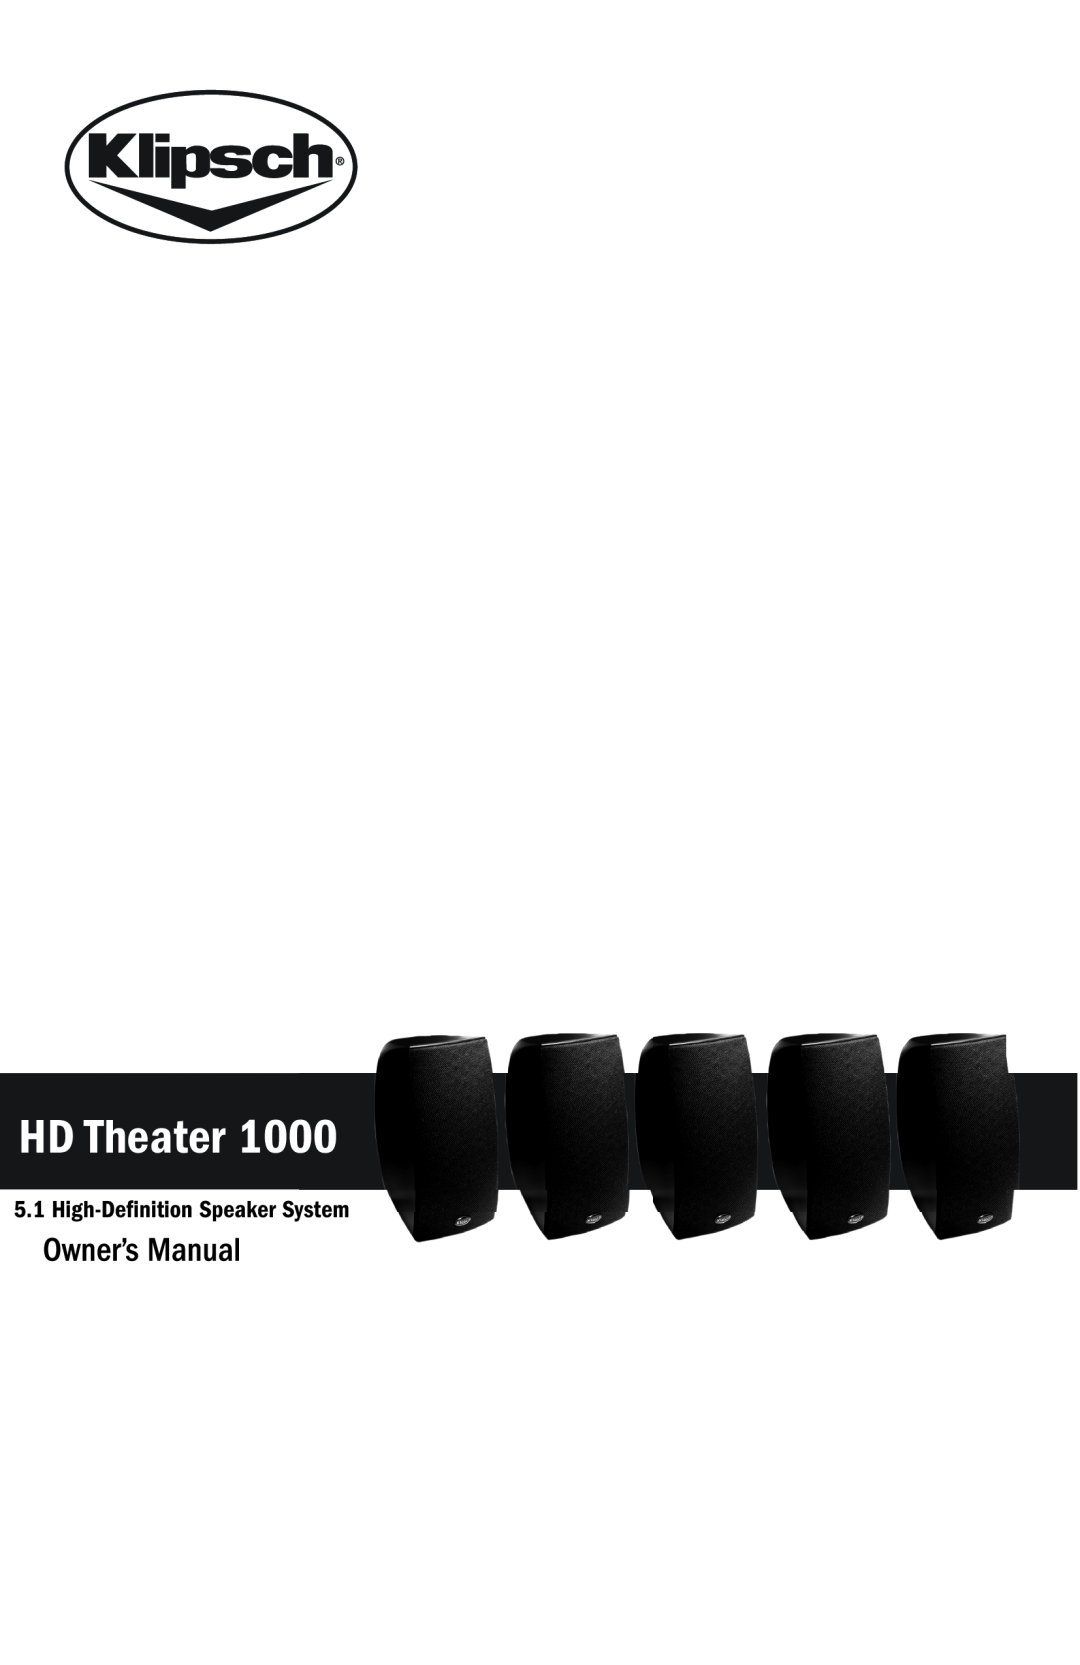 Klipsch 1000 manual High-DefinitionSpeaker System, HD Theater 